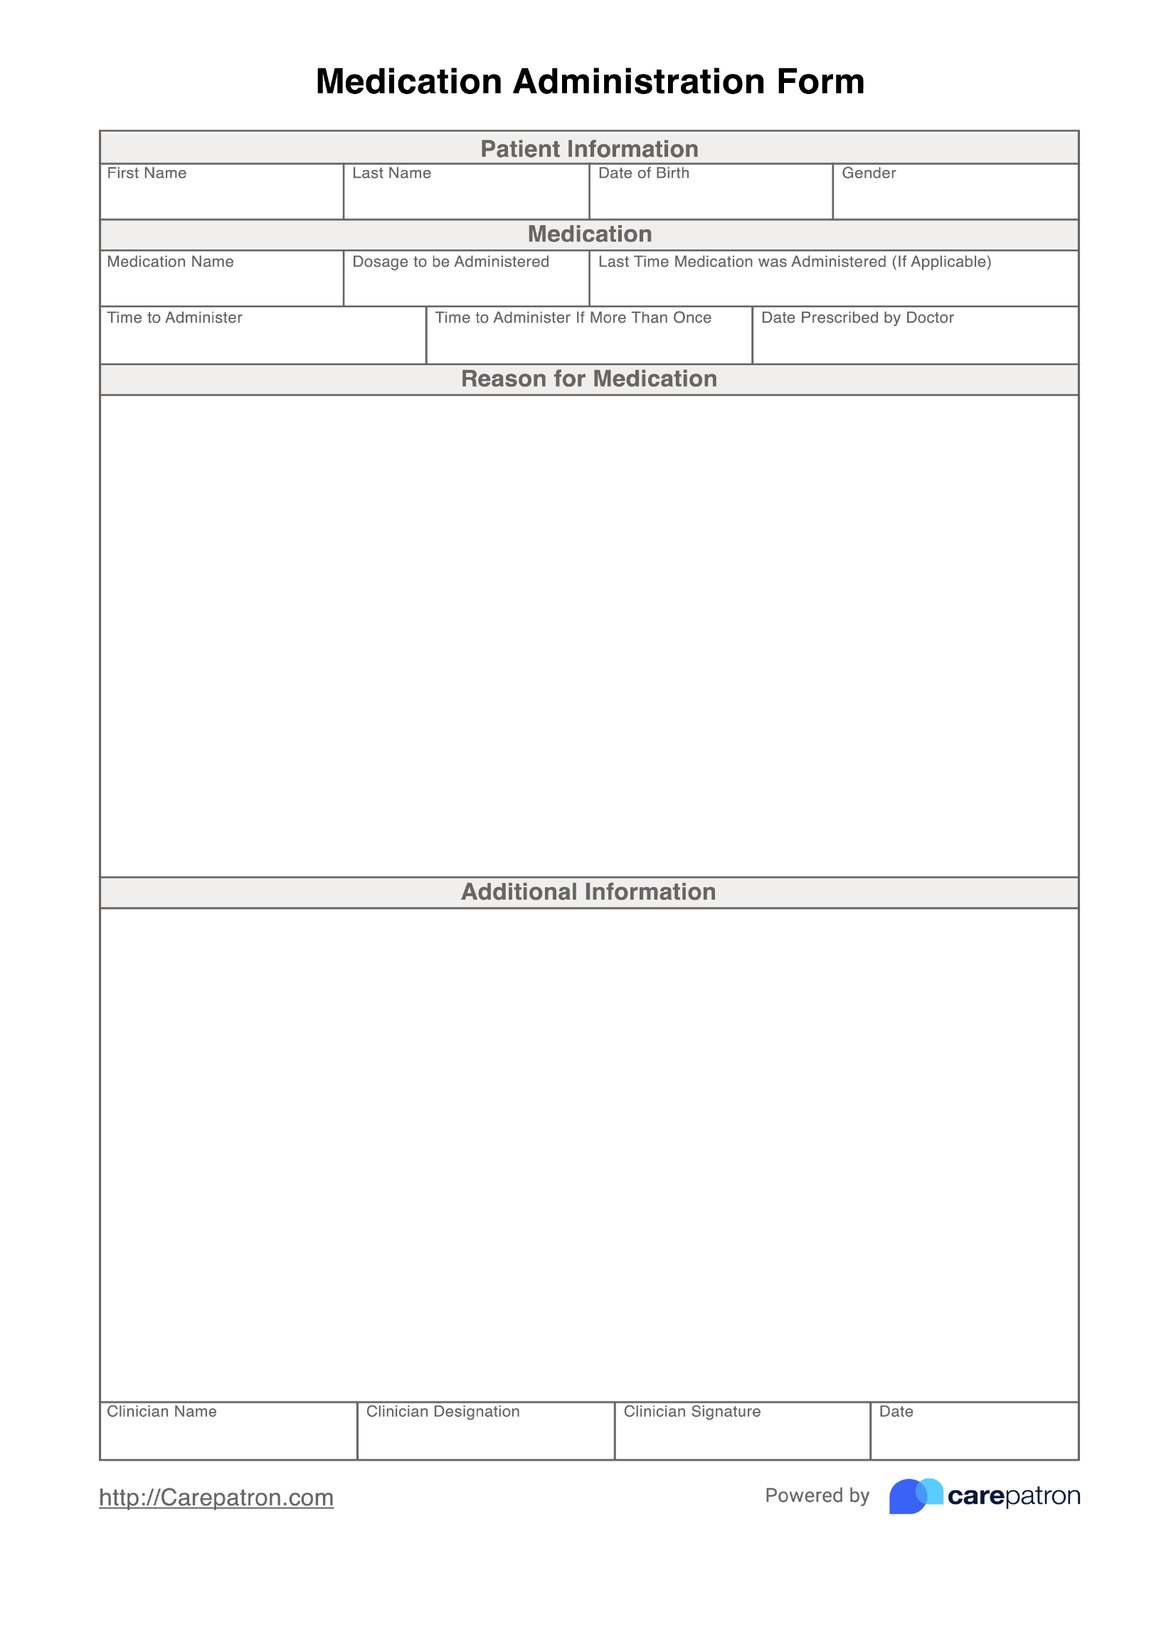 Medication Administration Form PDF Example